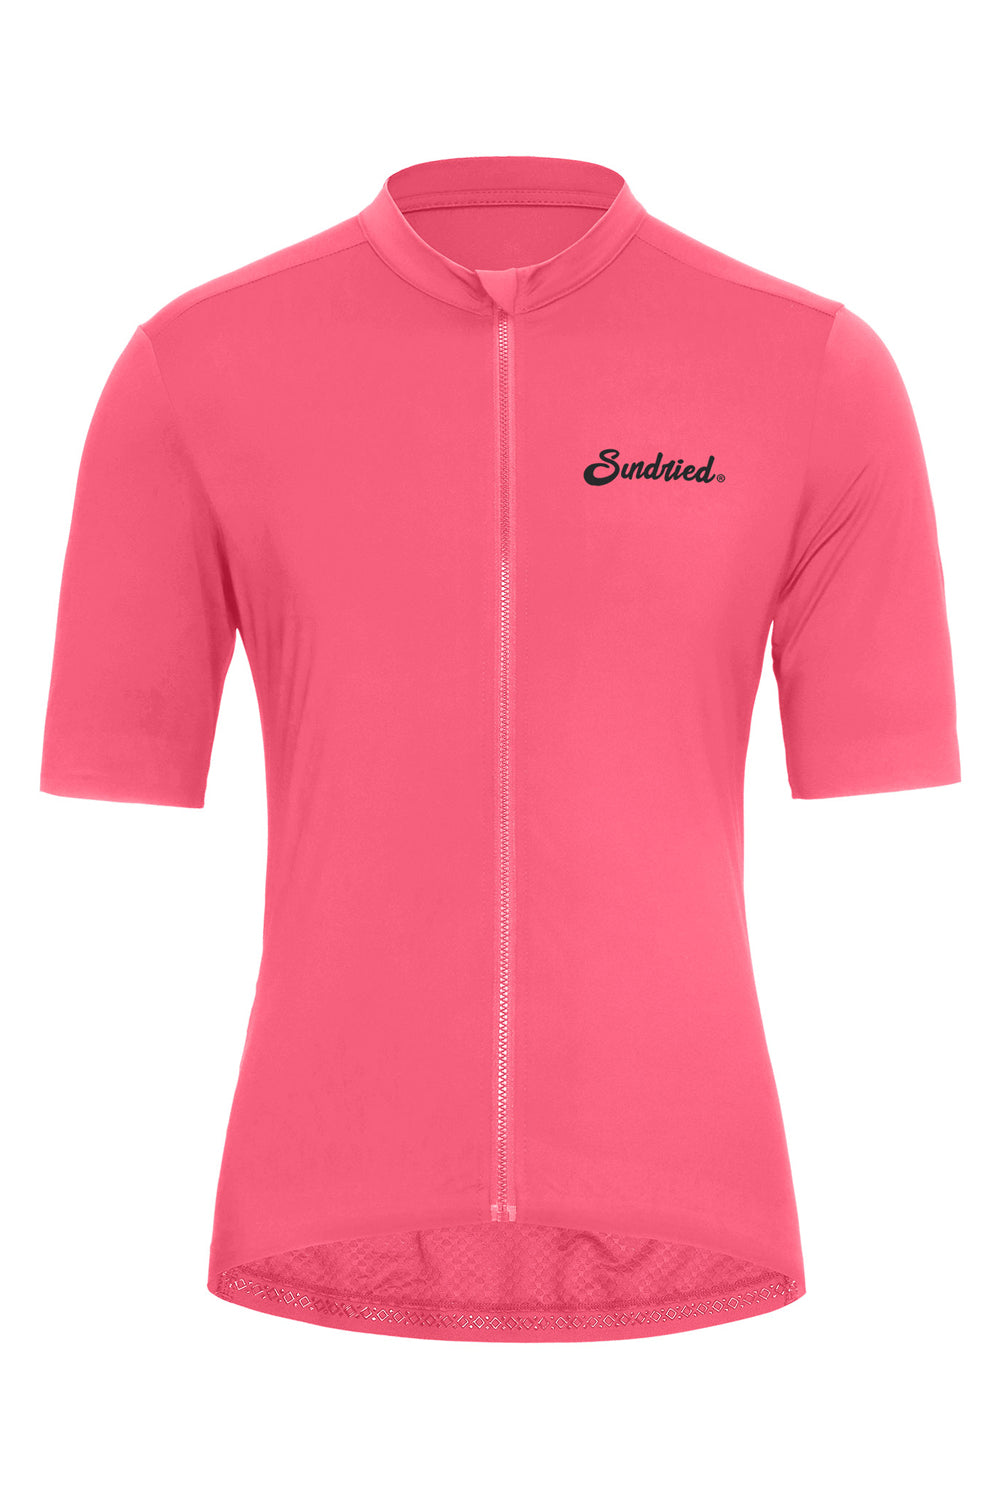 Sundried Sport Pianura Men's Pink Short Sleeve Cycle Jersey Short Sleeve Jersey S SS1001 S Pink Activewear